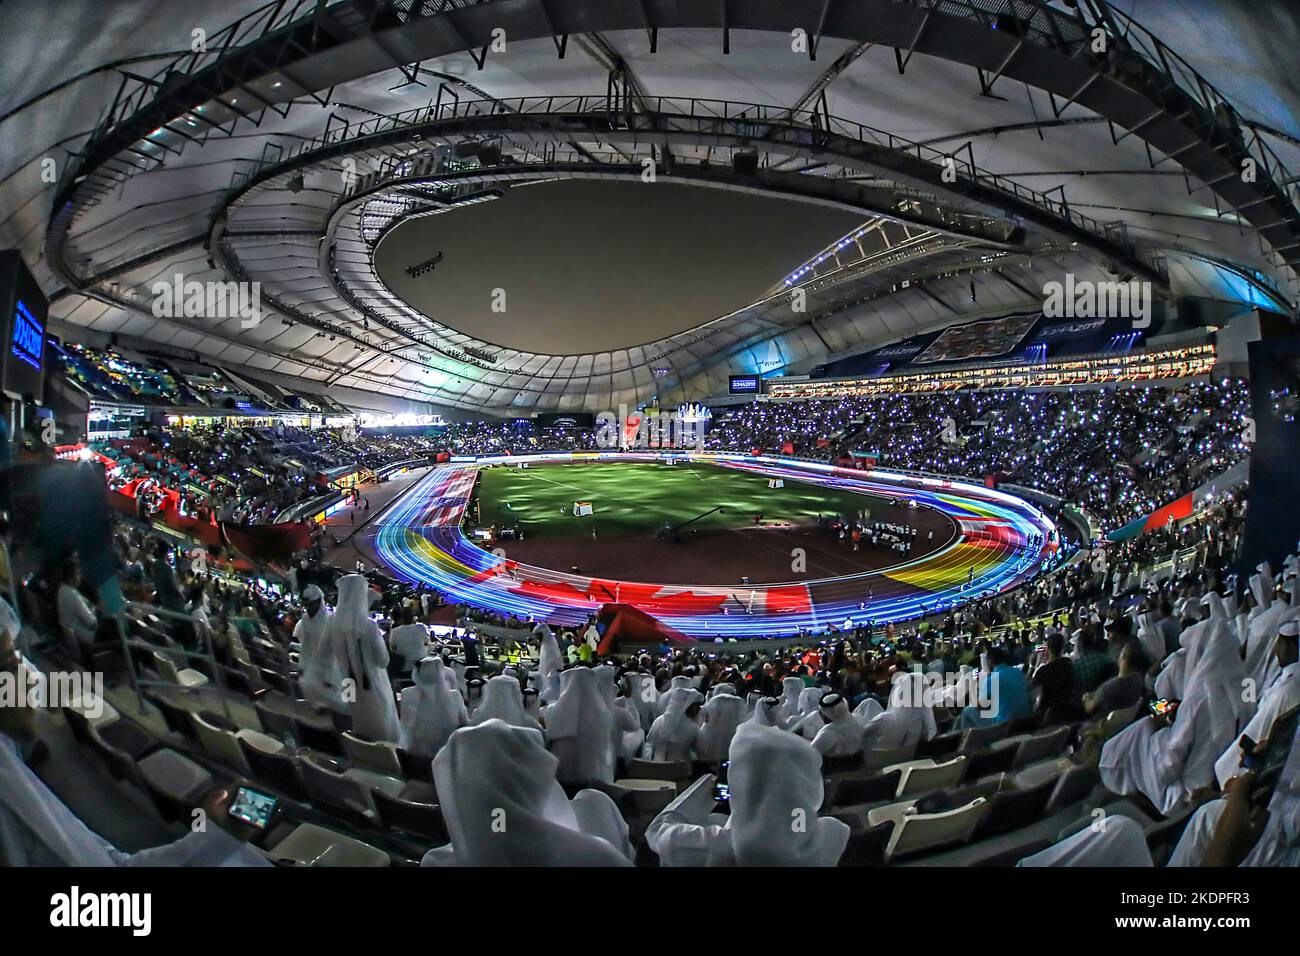 Khalifa International Stadium during a celebration of a soccer event. Stock Photo